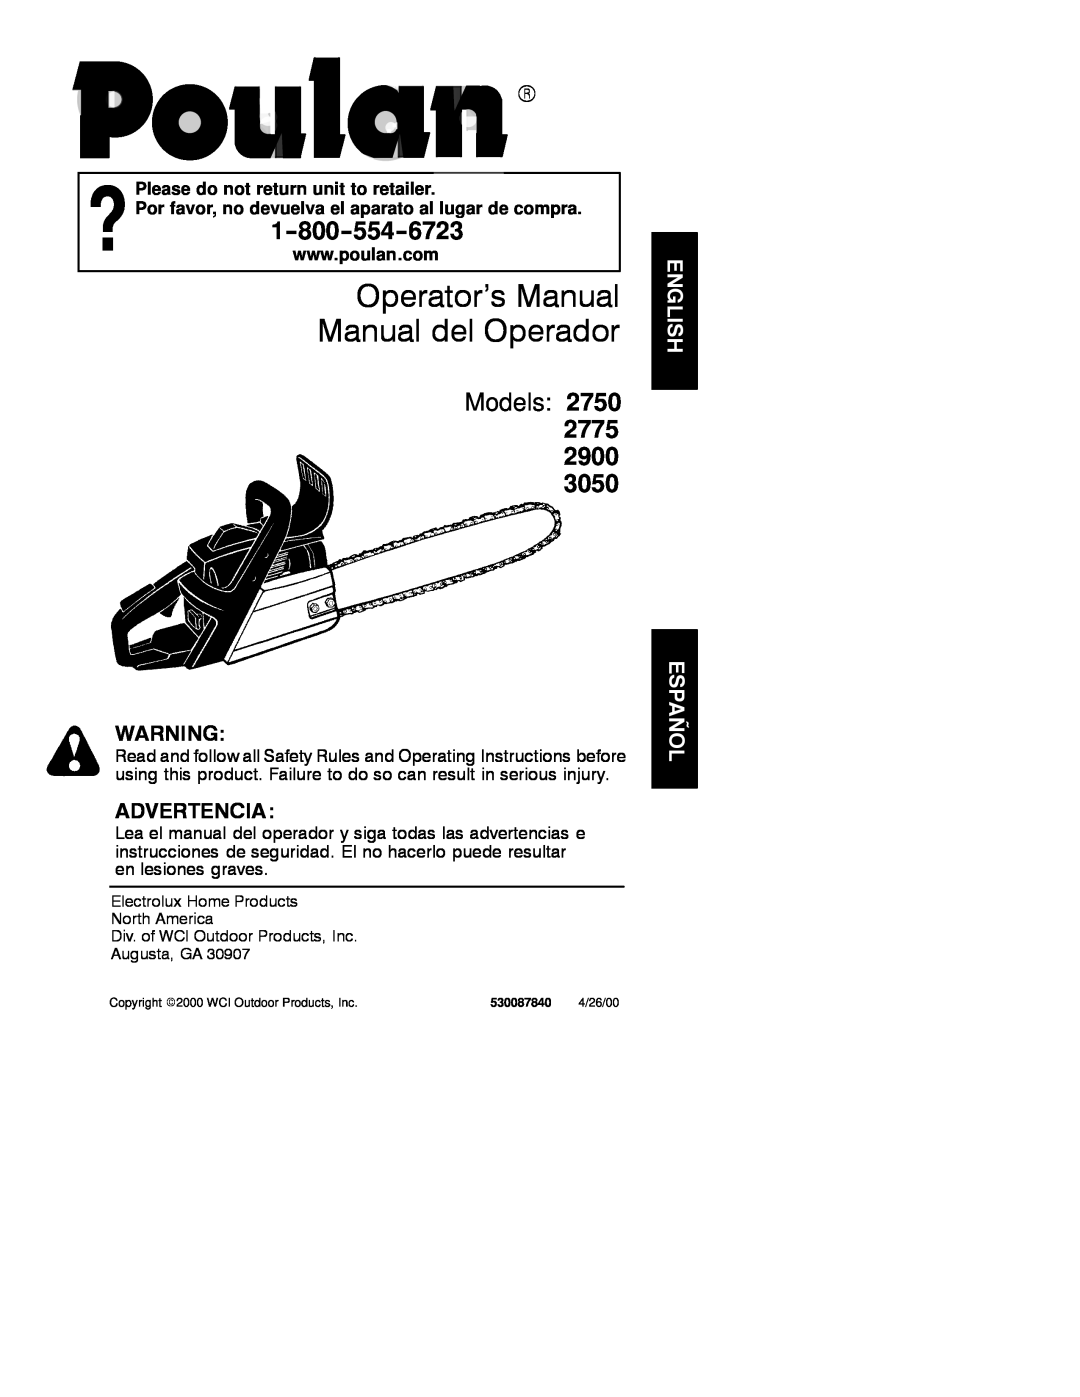 Poulan 2750, 2775, 2900, 3050 manual Operator’s Manual Manual del Operador, Models, Advertencia 